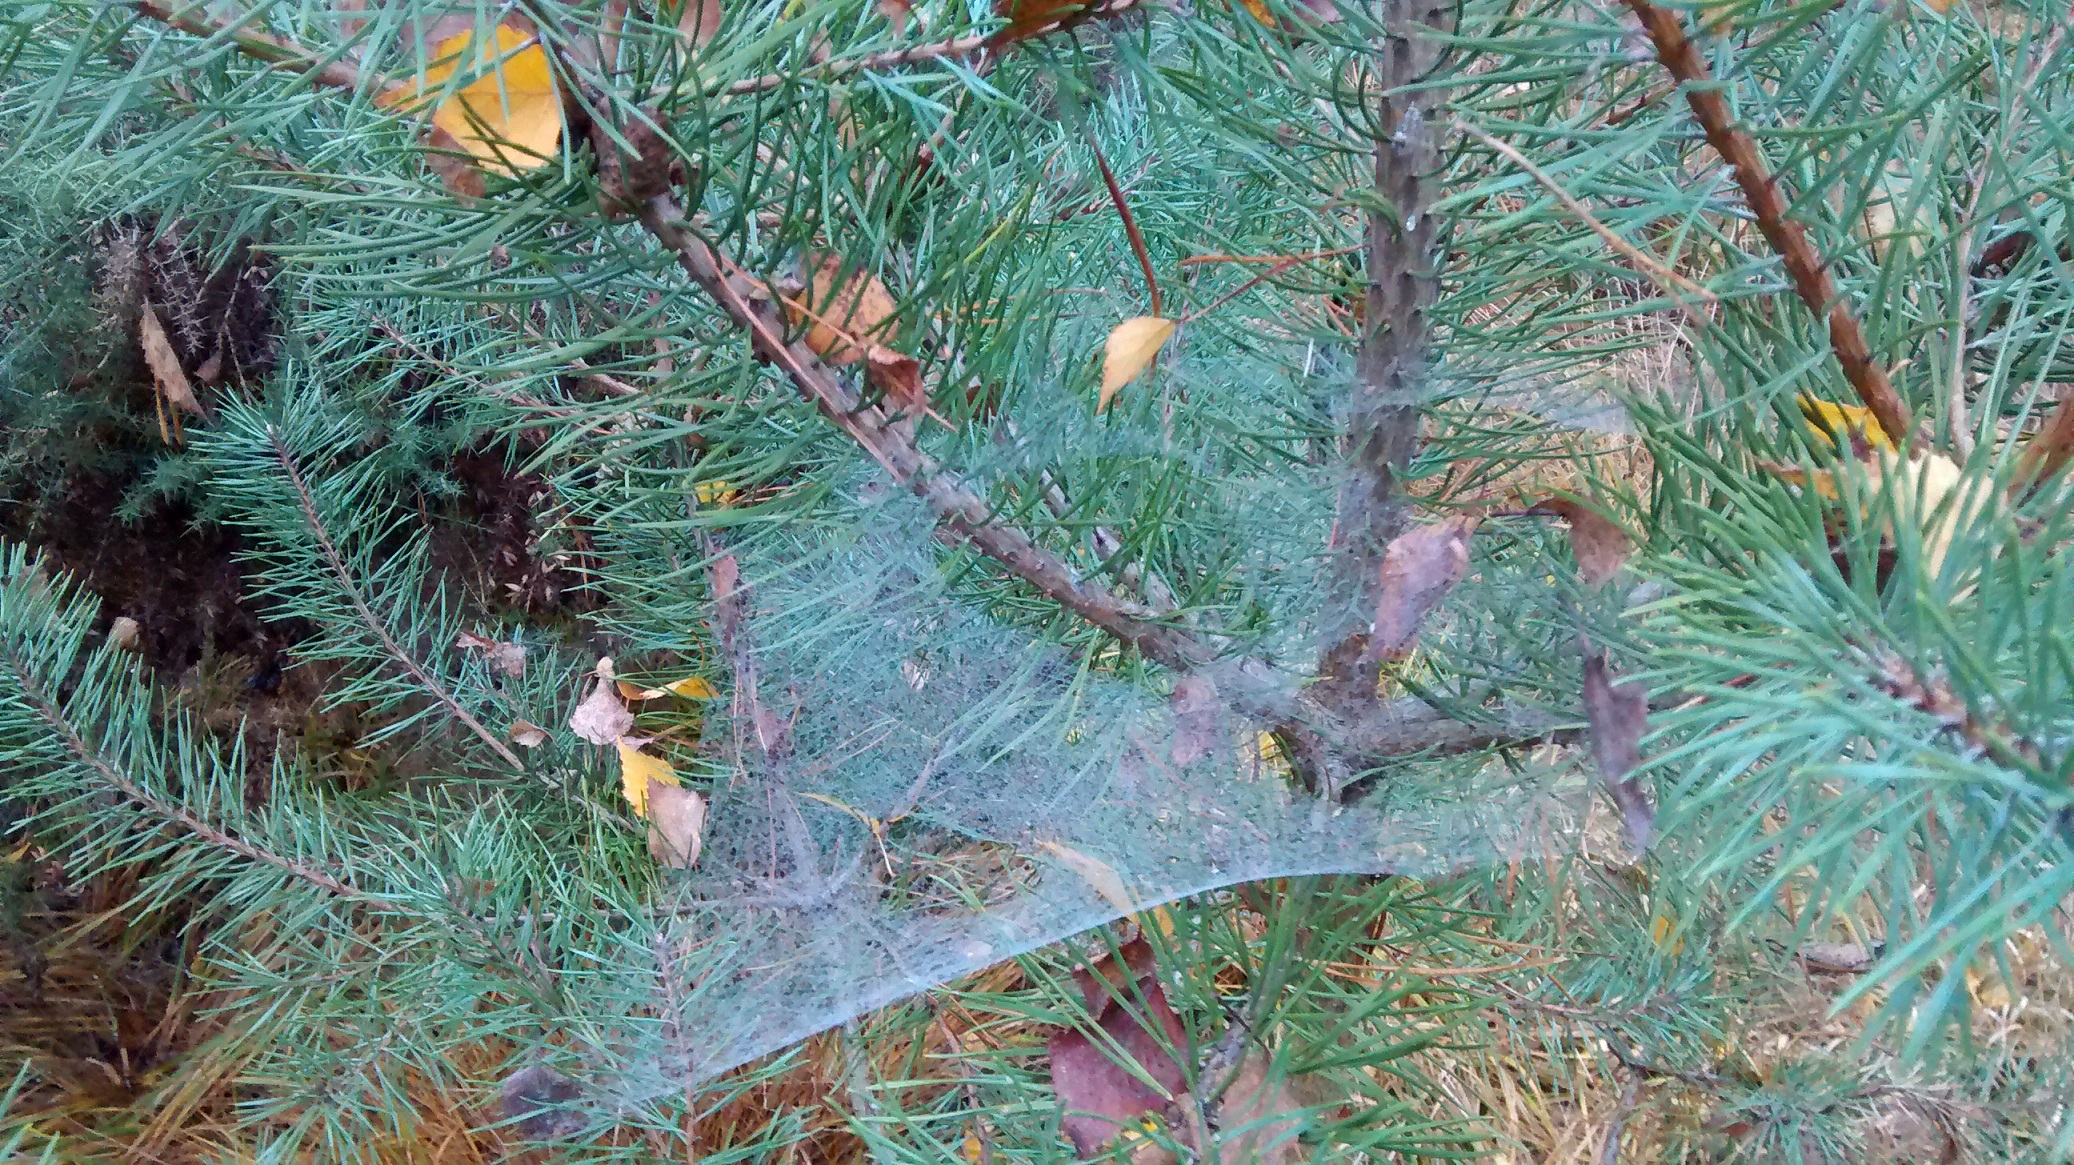 Pine tree cobwebs dew winter